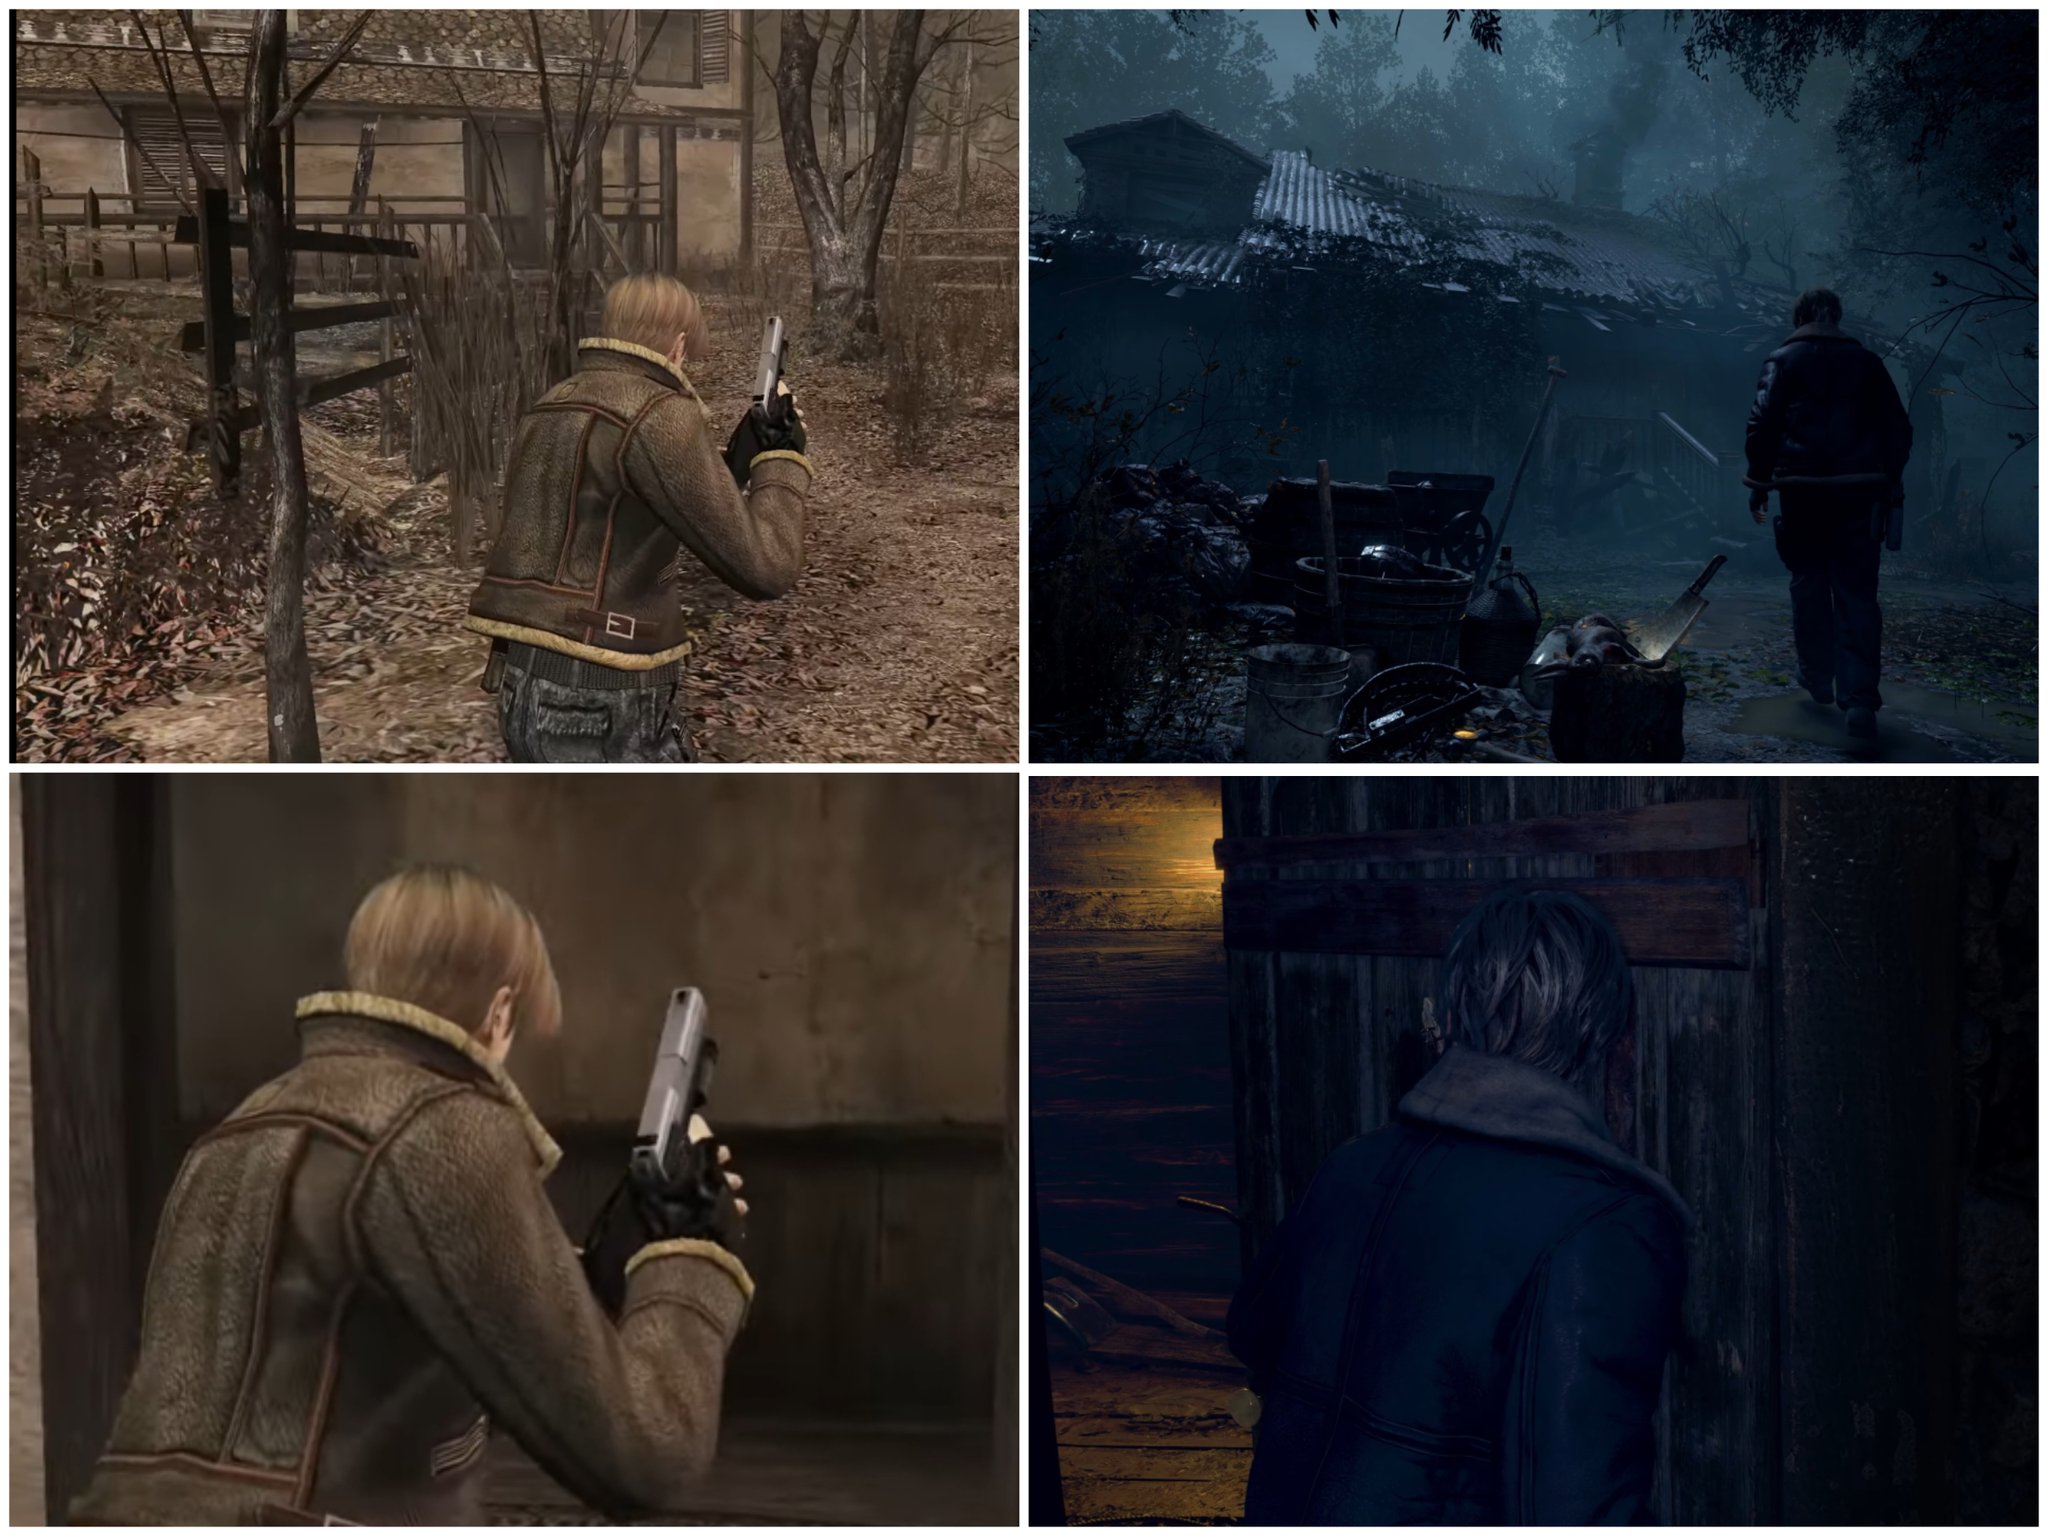 Resident Evil 4 Remake Looks Even More Impressive In Side-By-Side  Comparison